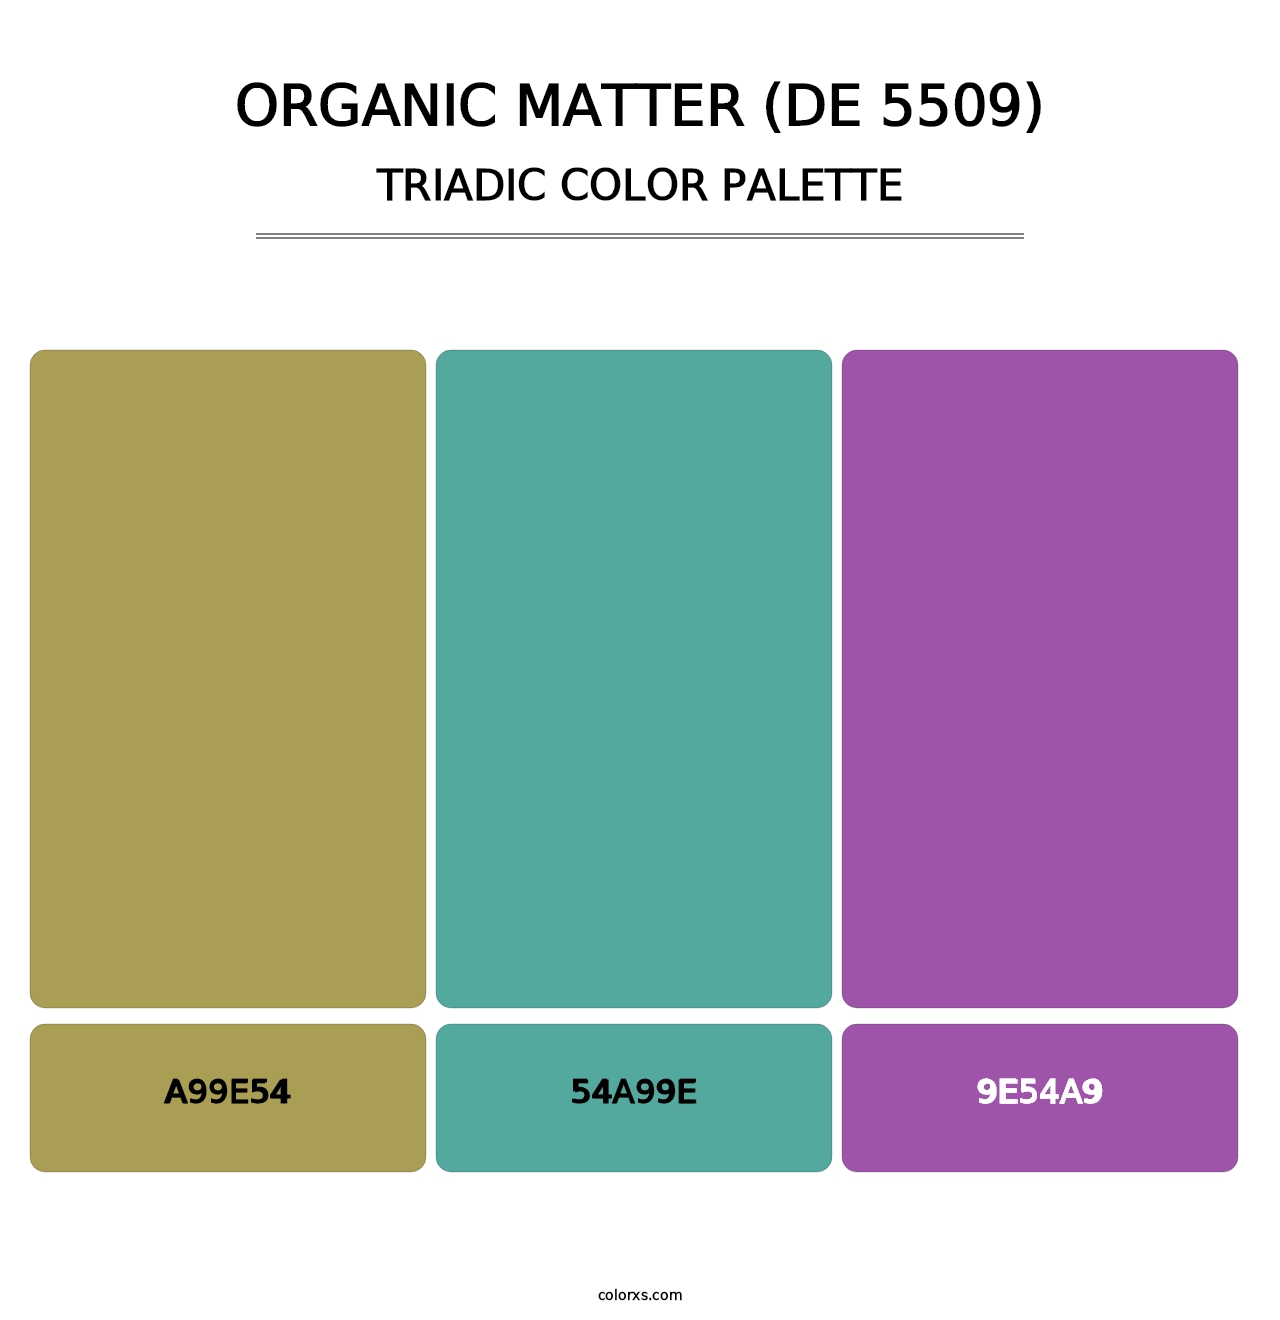 Organic Matter (DE 5509) - Triadic Color Palette